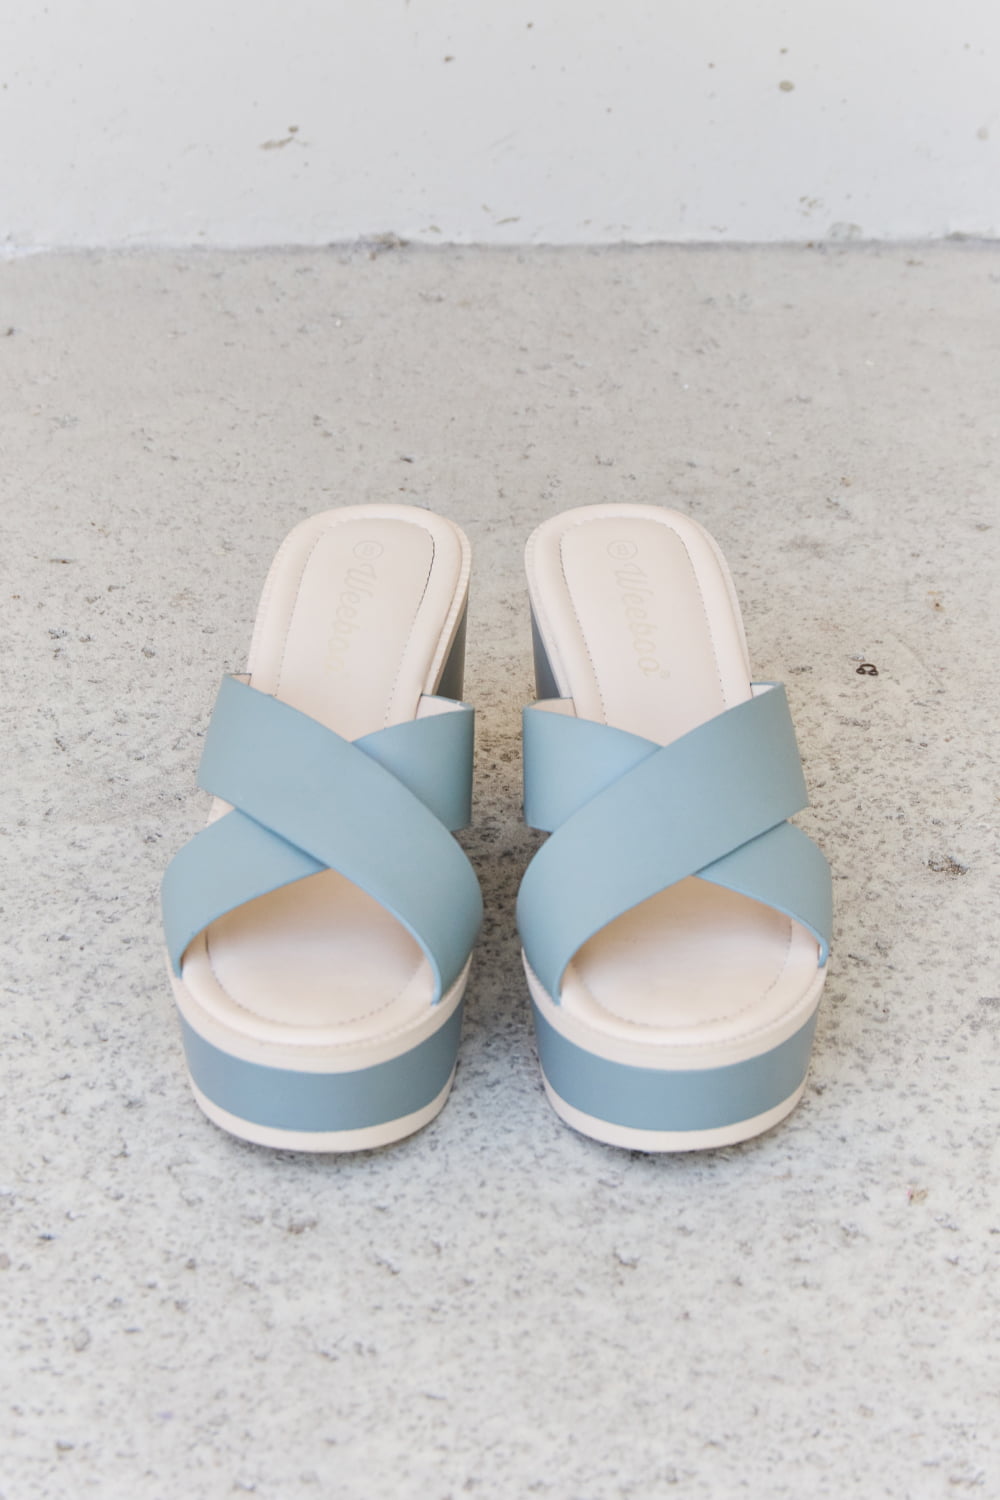 Weeboo Cherish The Moments Contrast Platform Sandals in Misty Blue - AllIn Computer